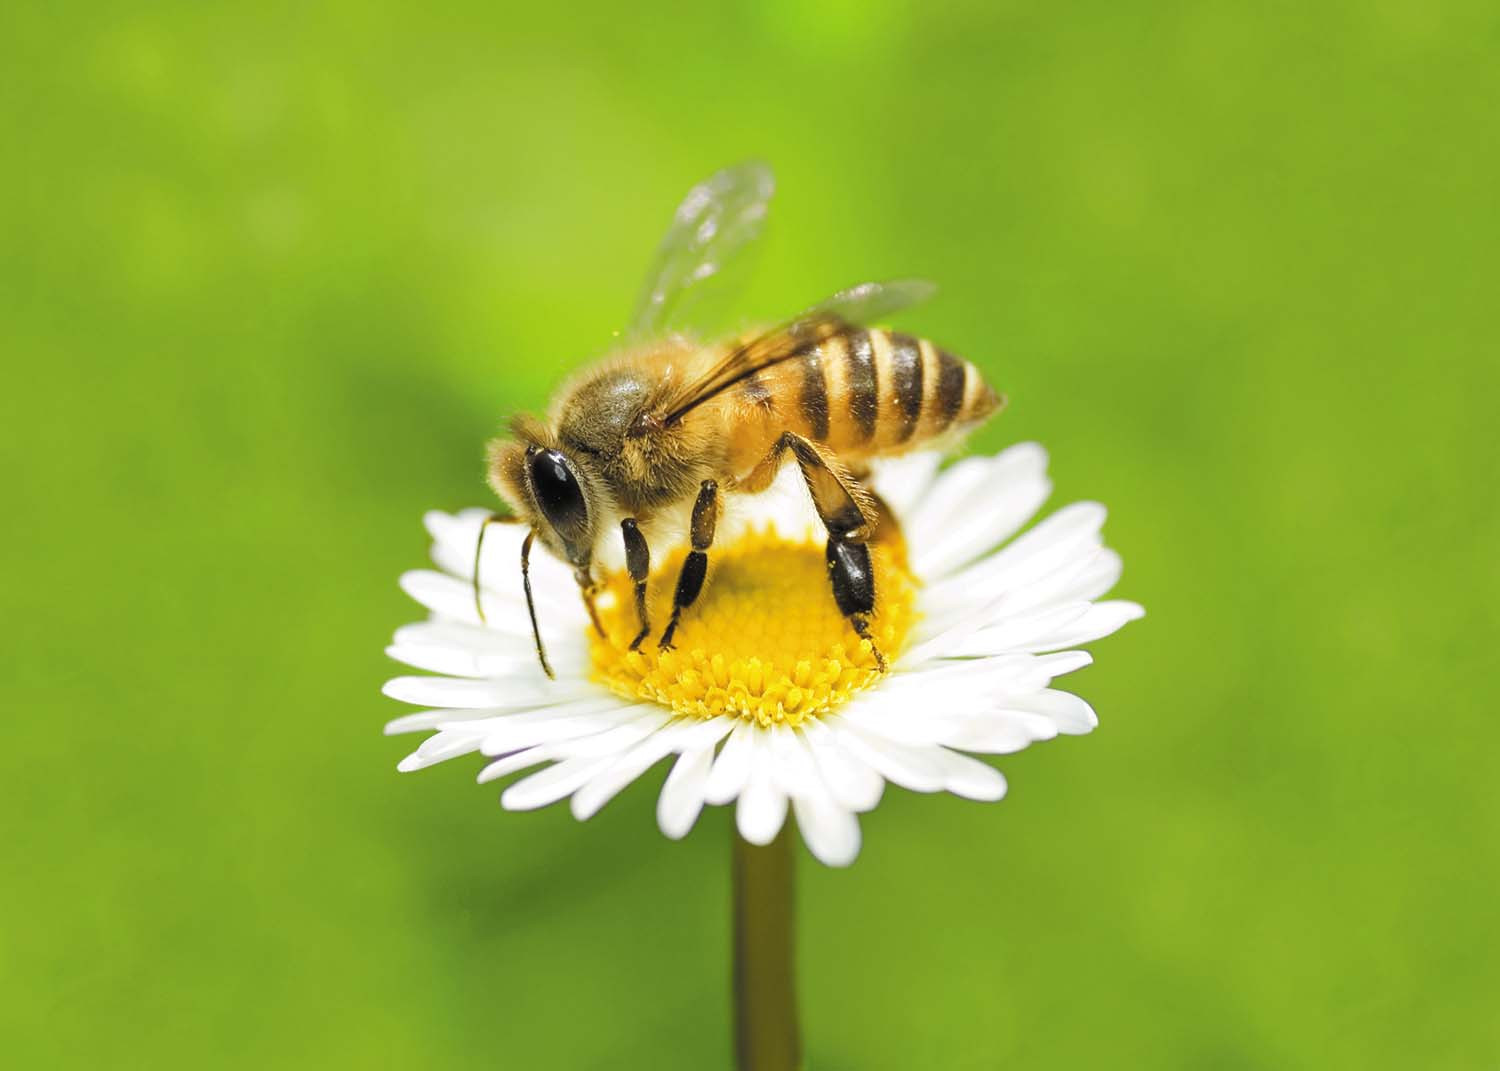 close-up photo of a honeybee on a daisy